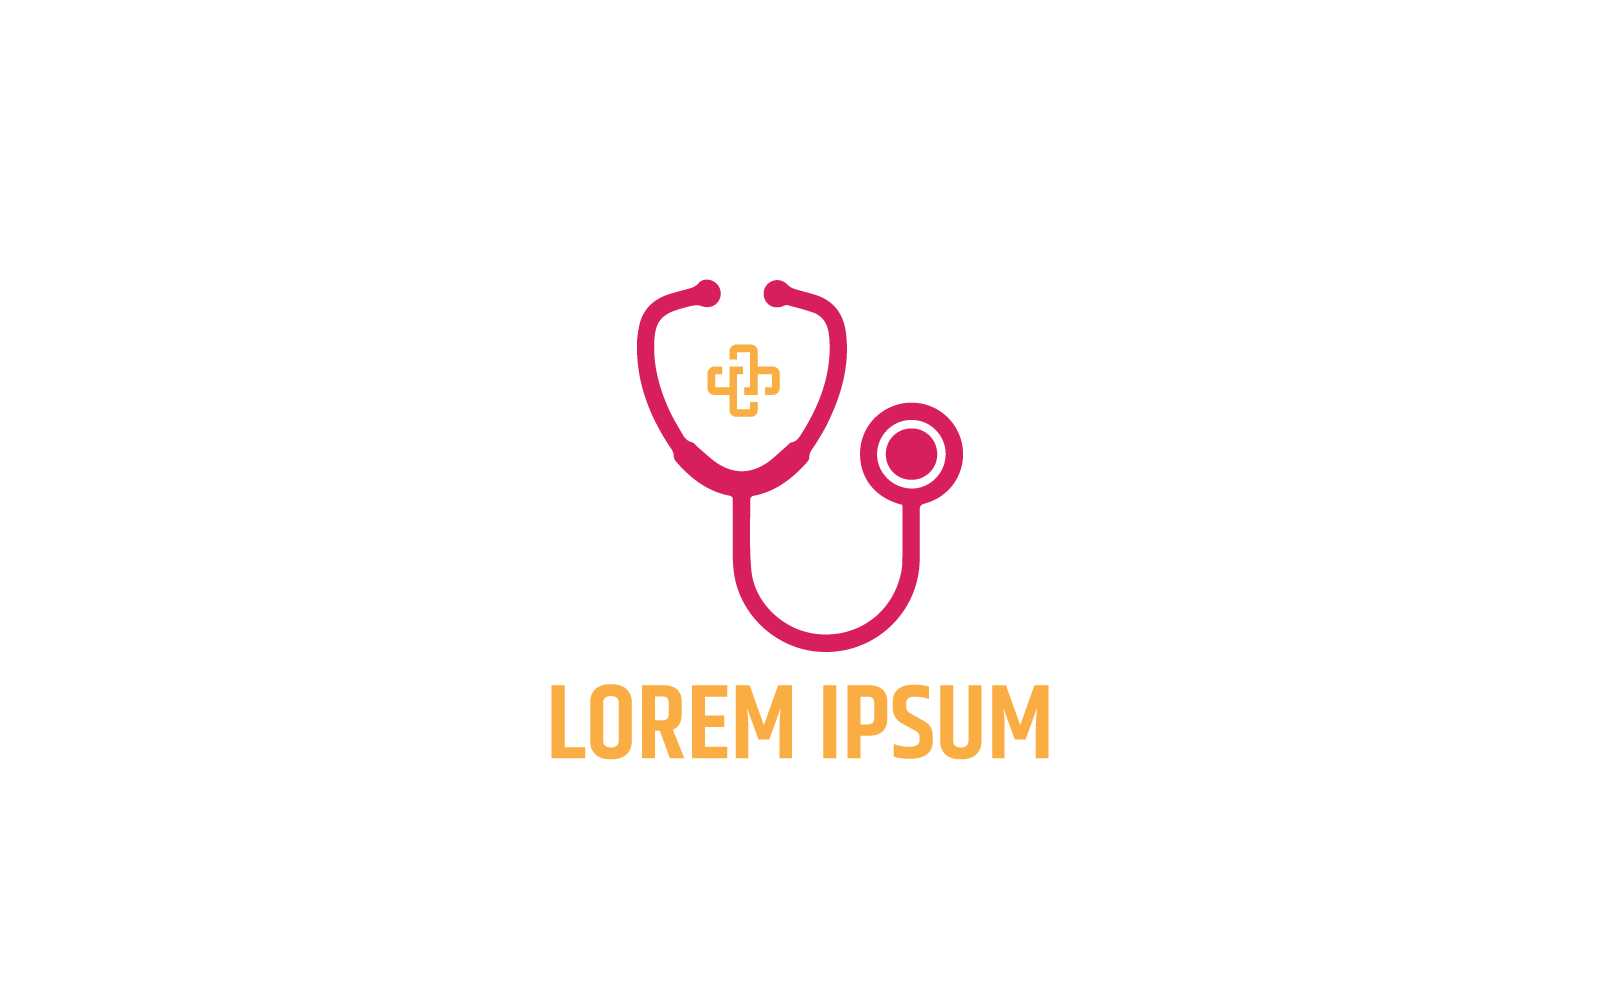 Création de logo de docteur minimaliste moderne